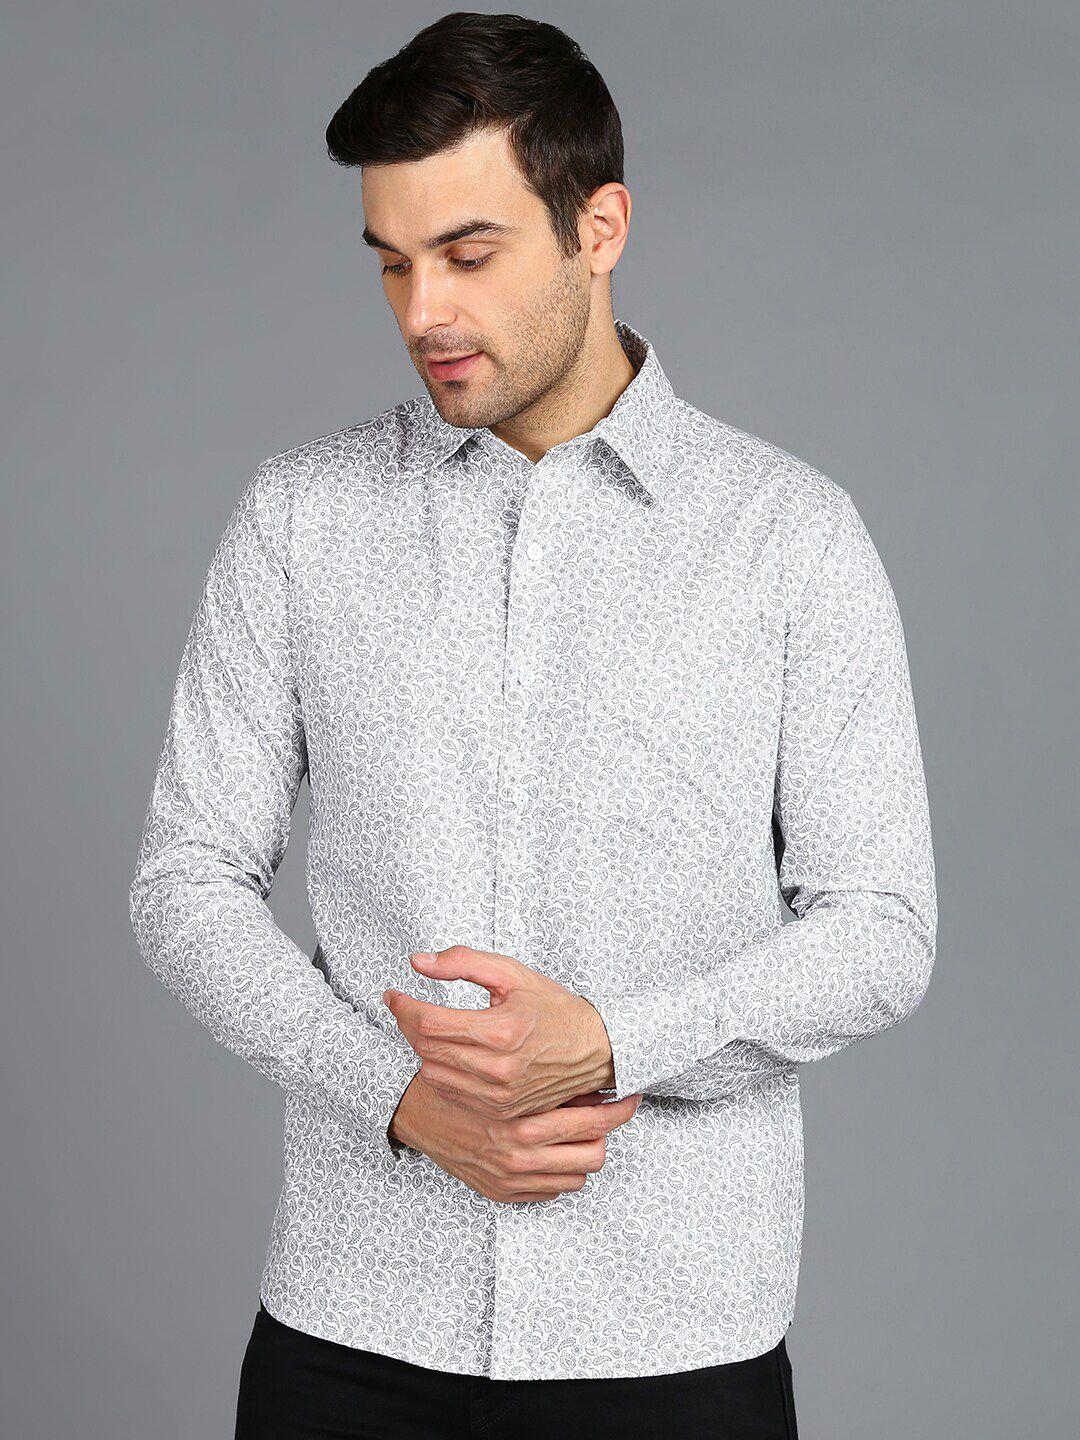 znx clothing men grey premium floral opaque printed formal shirt